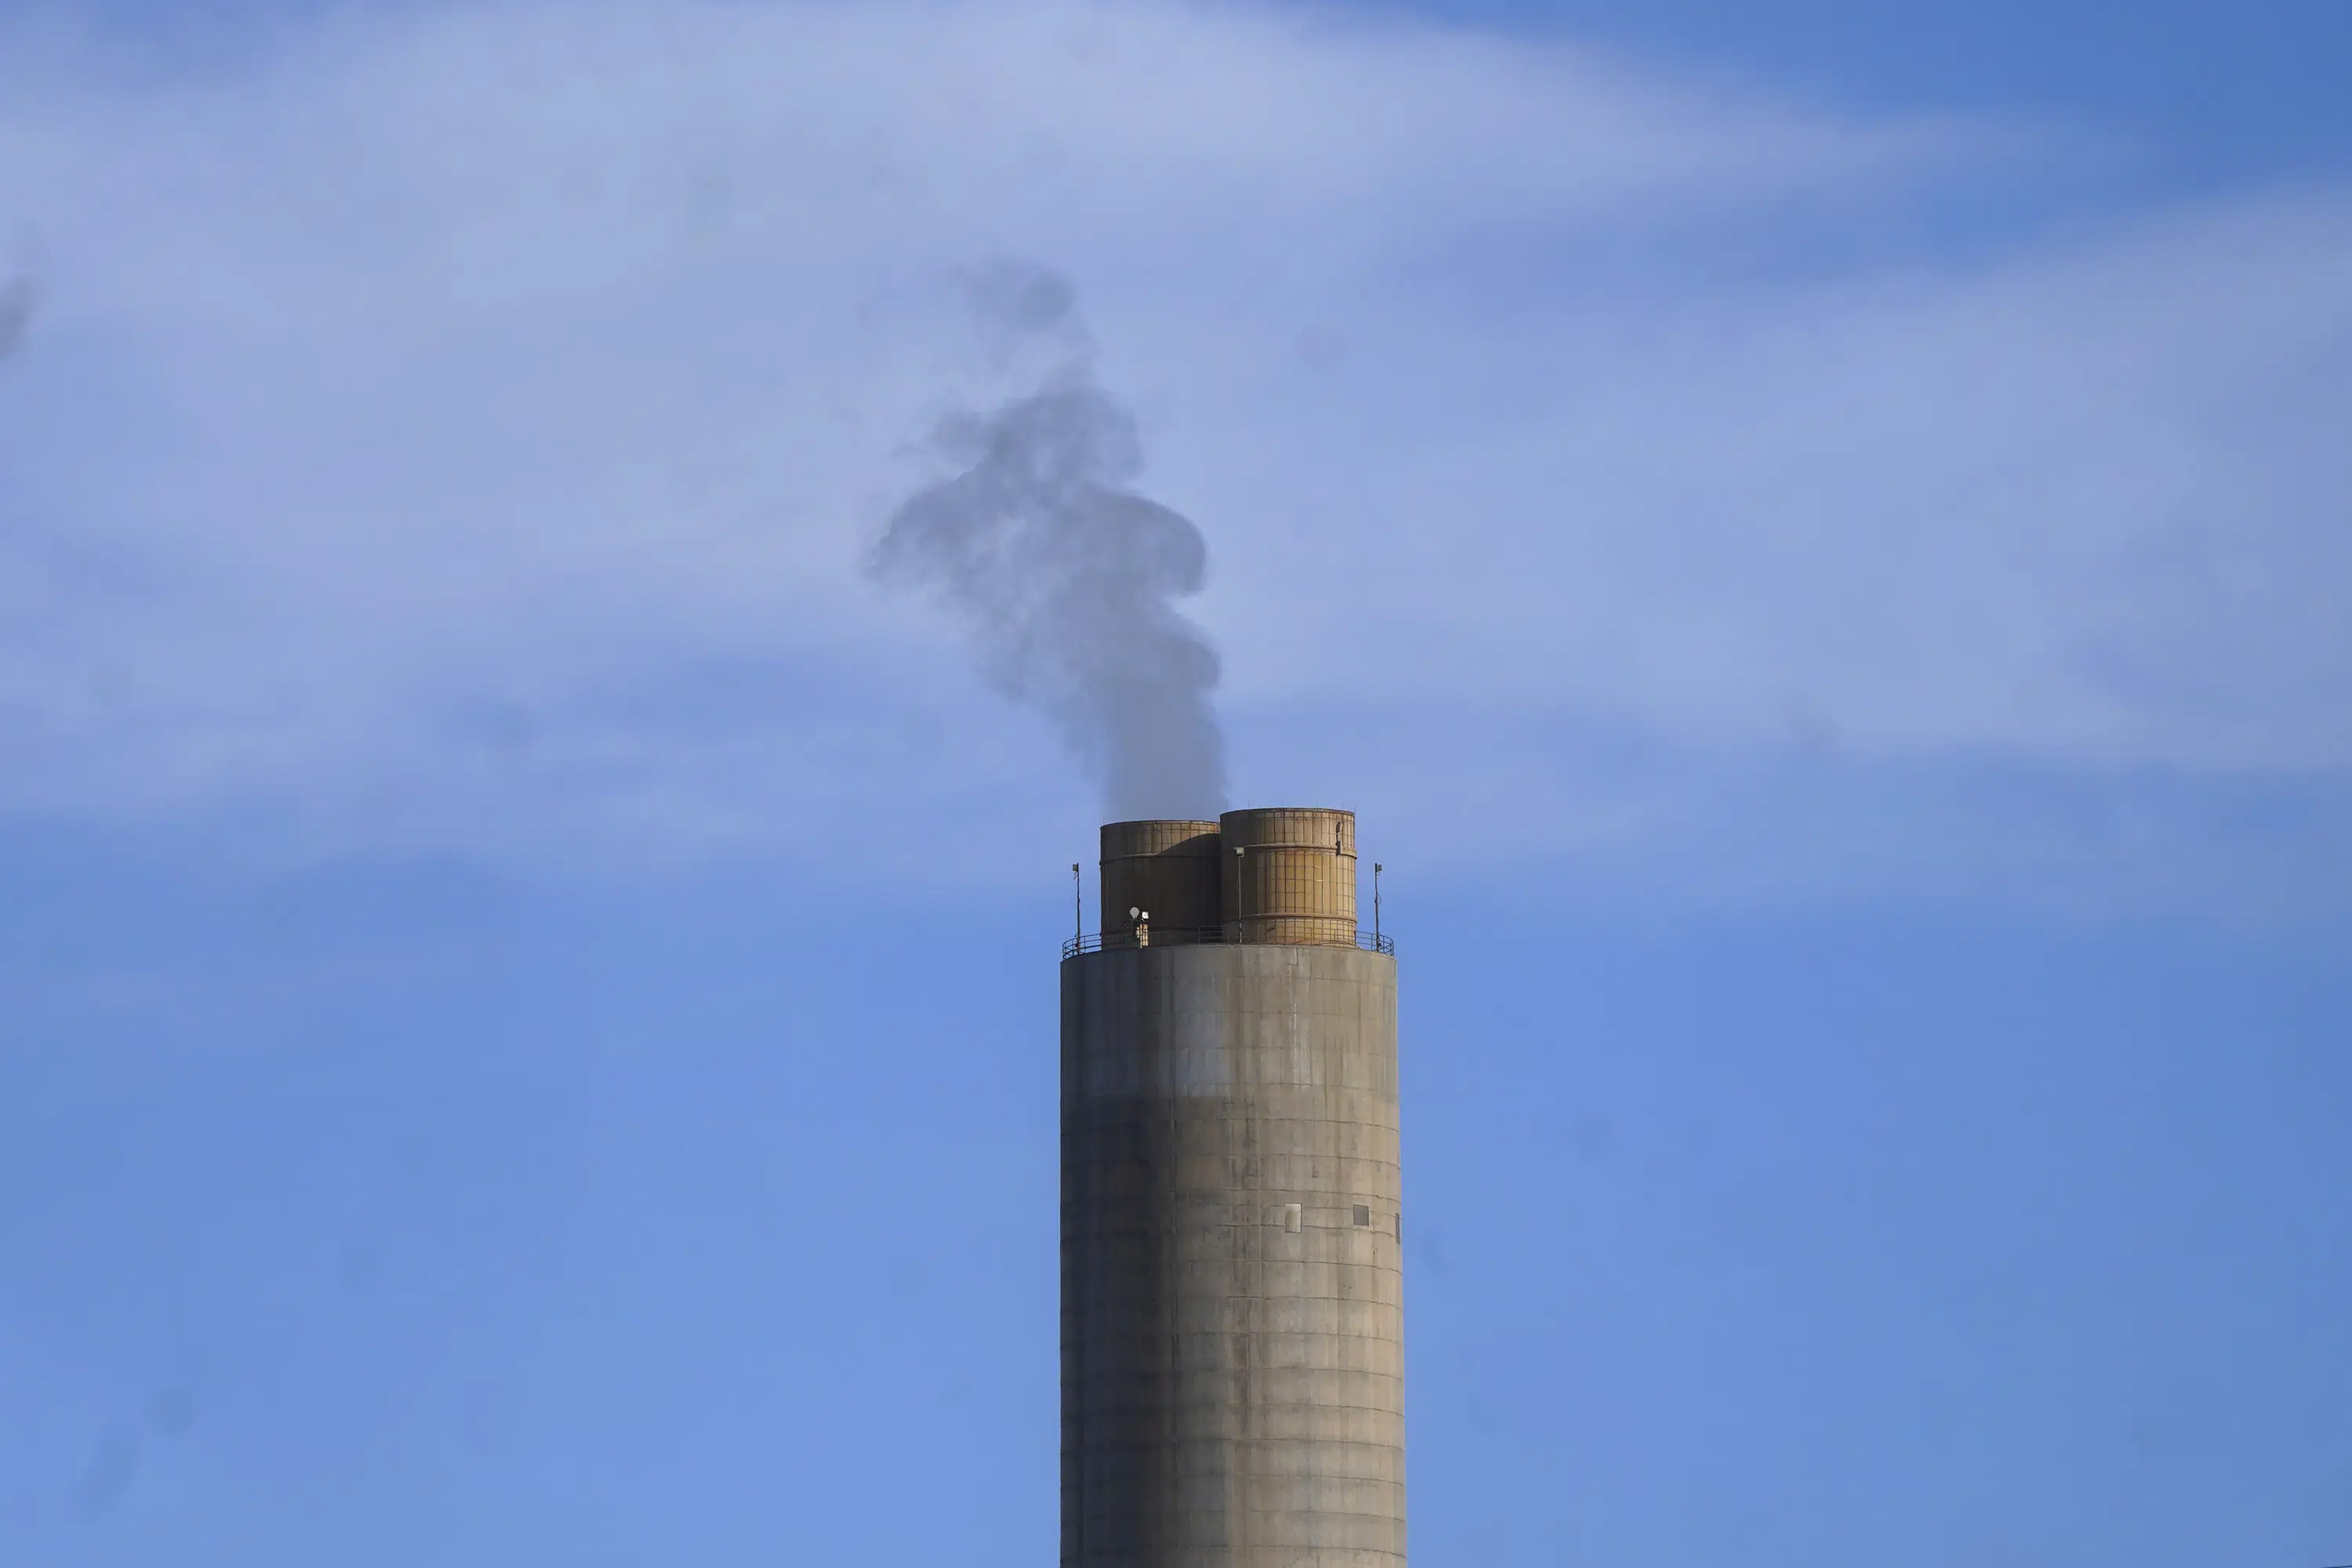 EPA ‘neighbor’ rule cuts downwind pollution by power plants